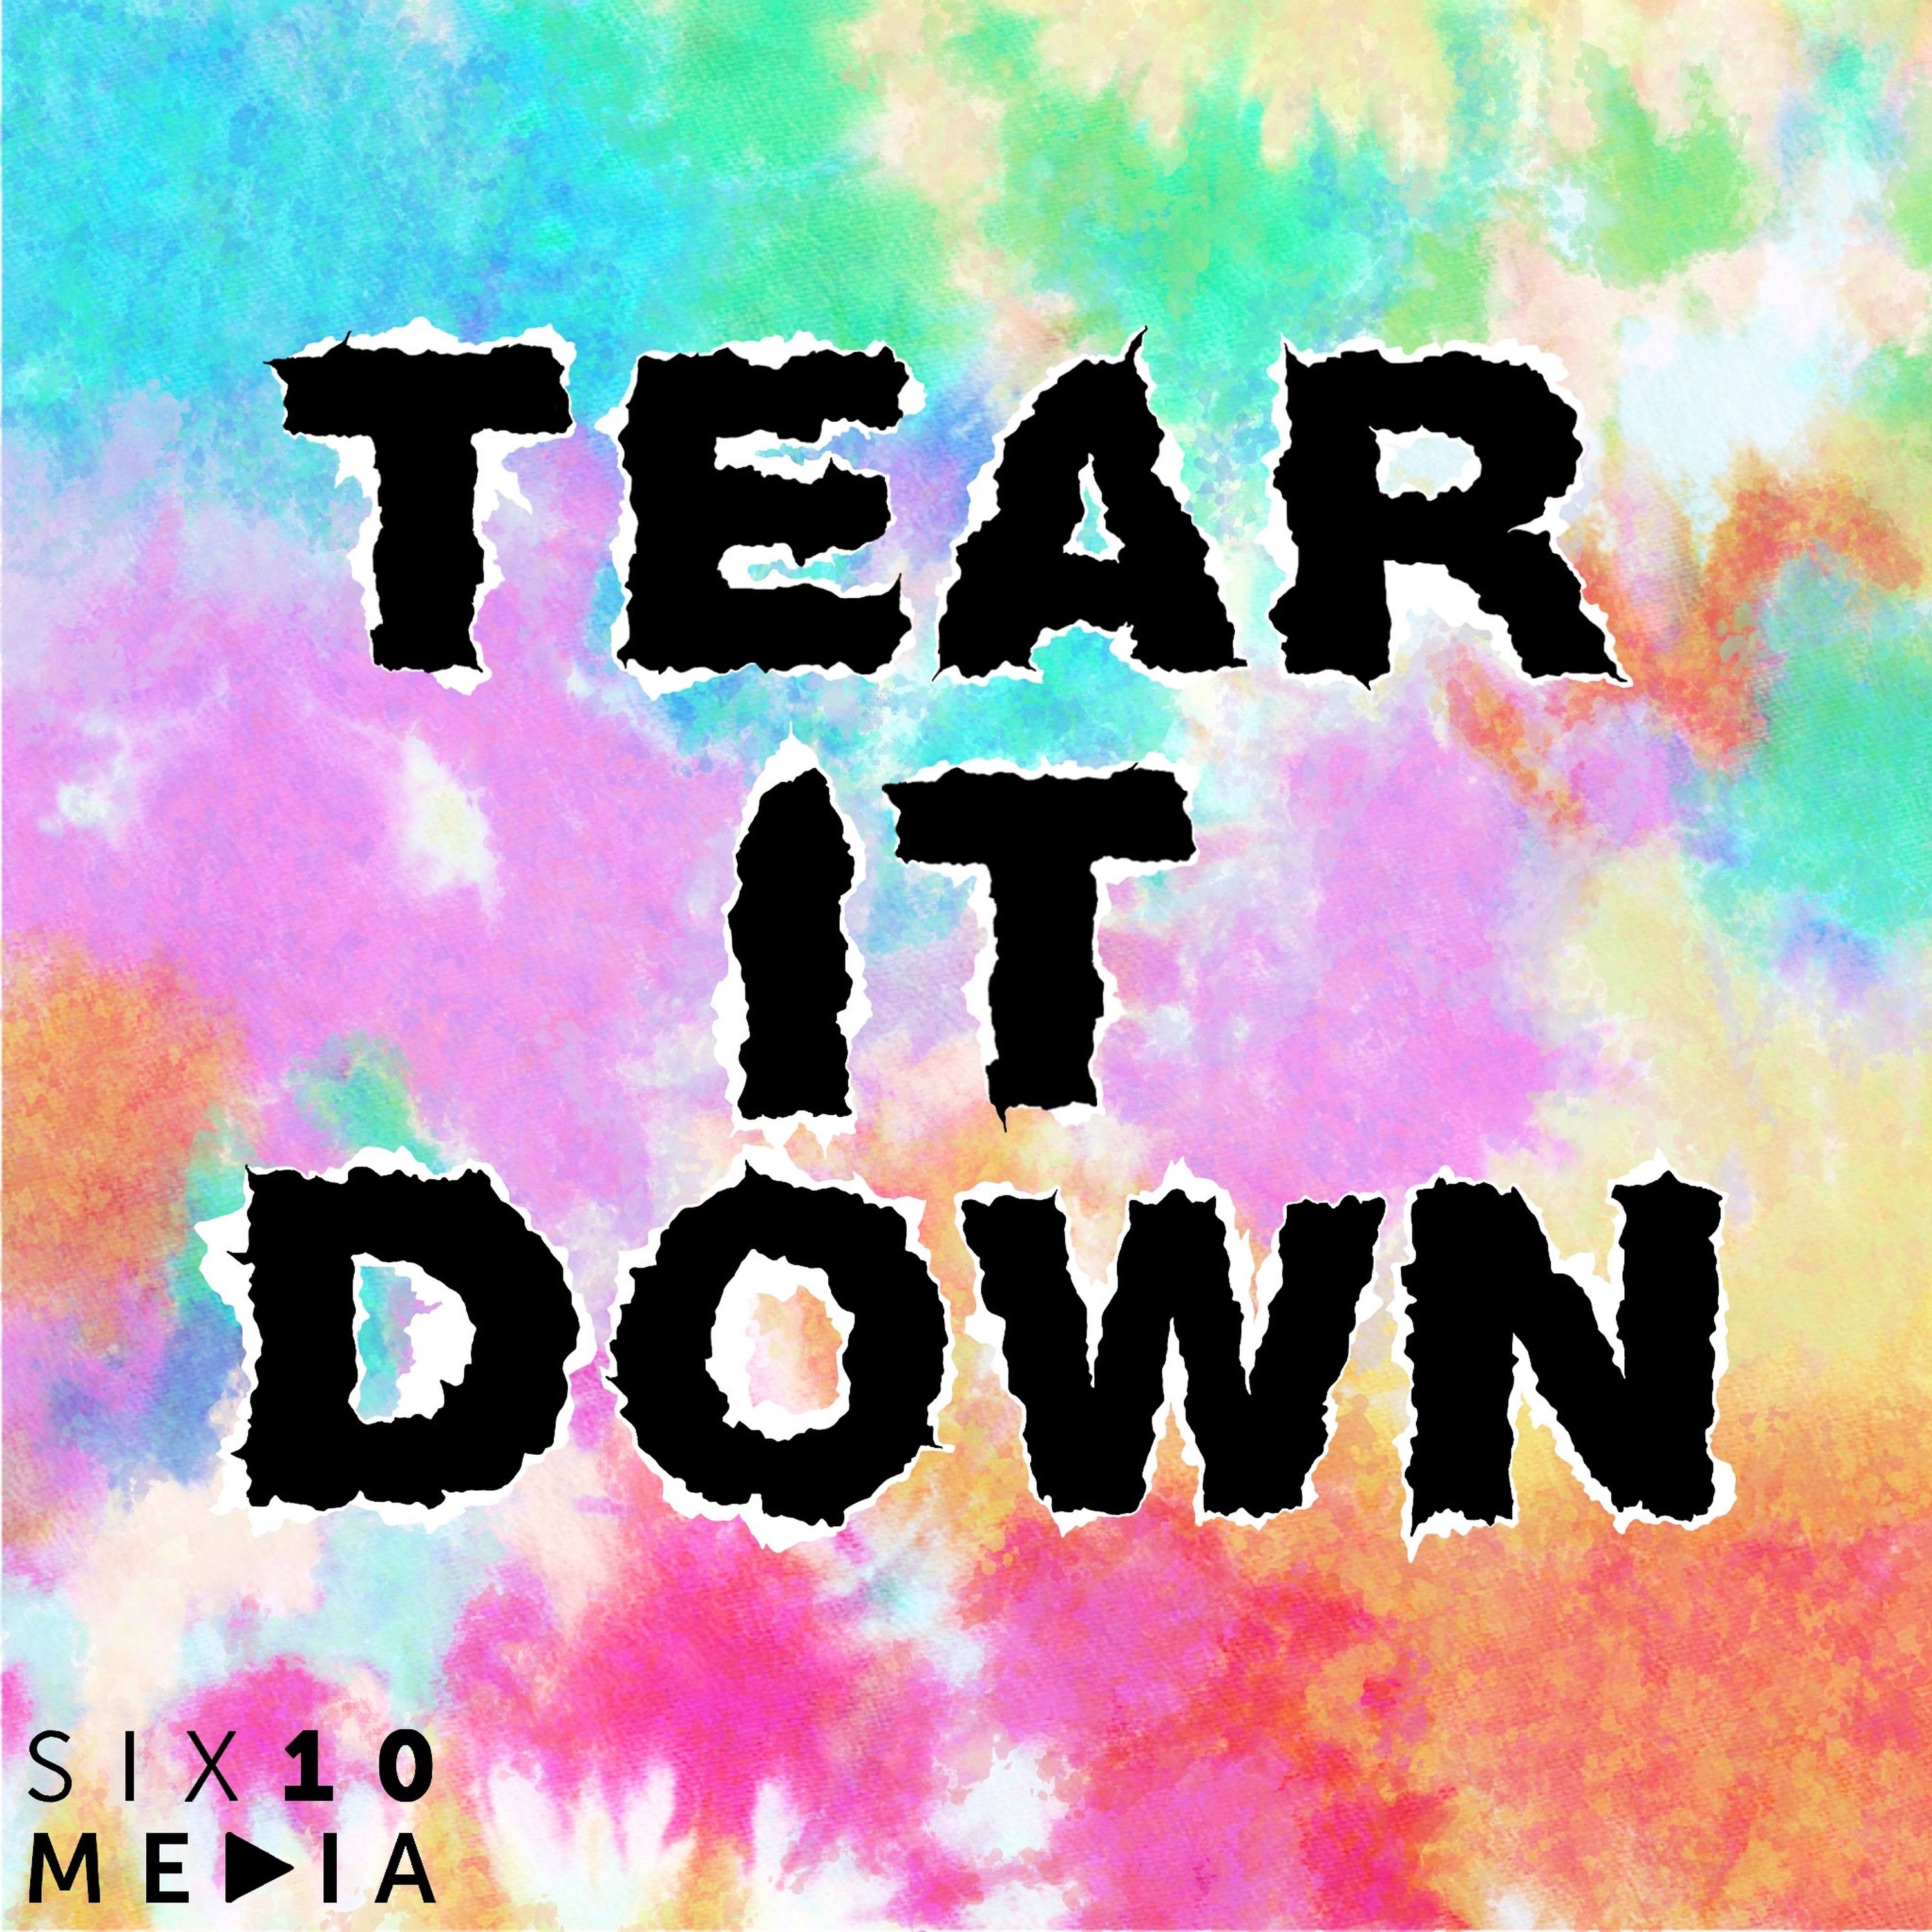 Introducing 'Tear it Down'